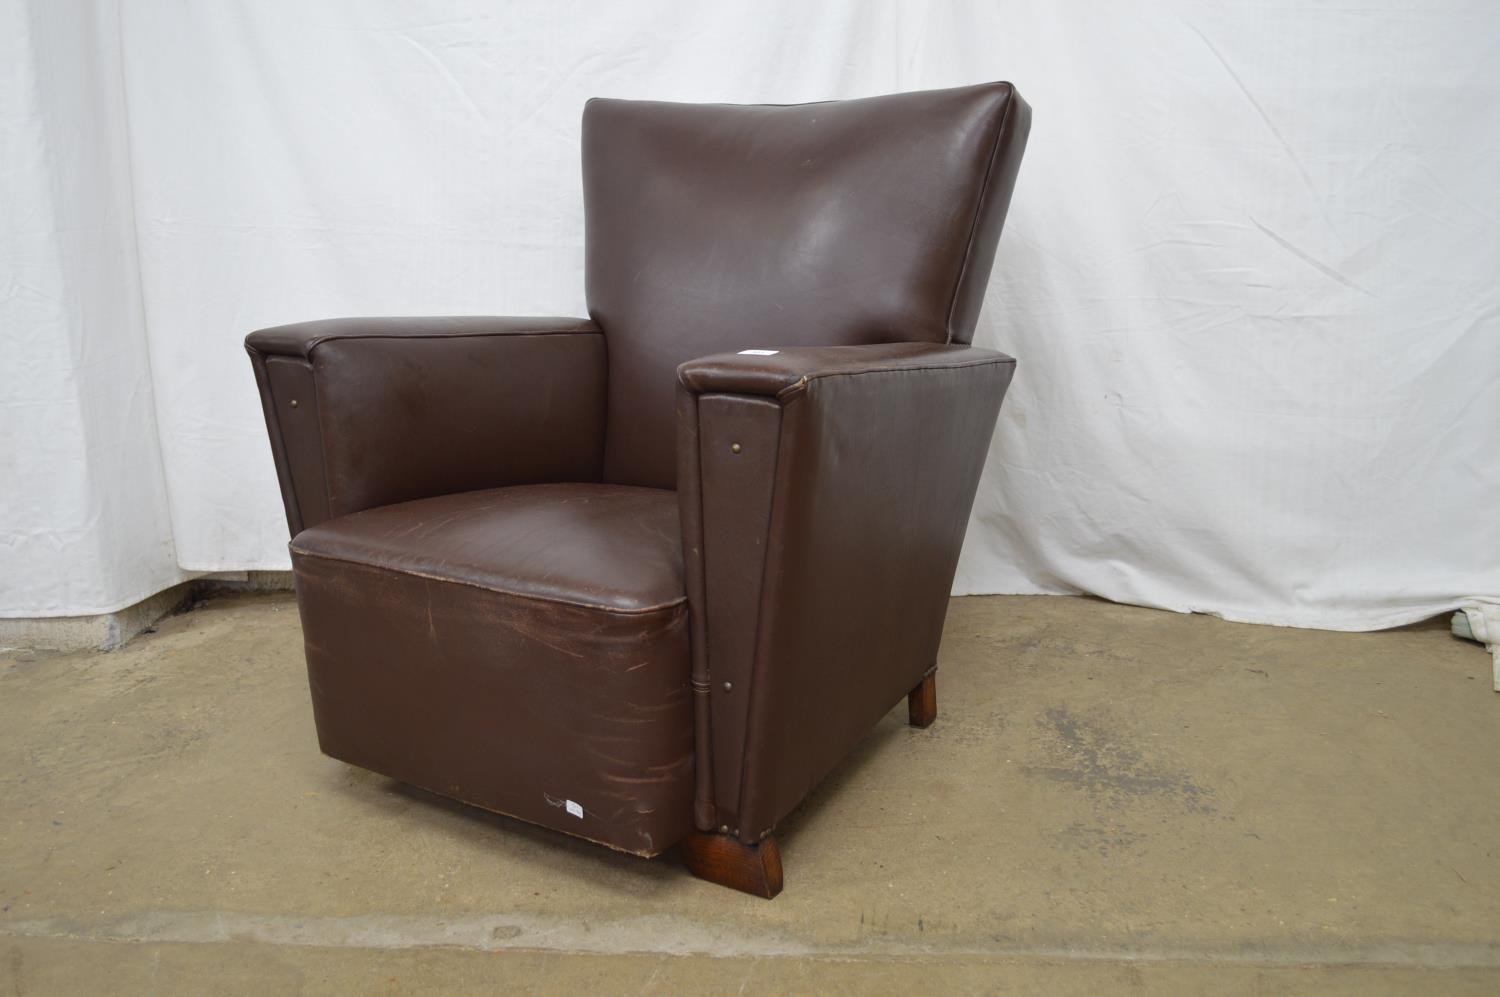 Brown leatherette Art Deco style club armchair on oak feet - 87cm x 83cm x 88cm tall Please note - Image 2 of 5